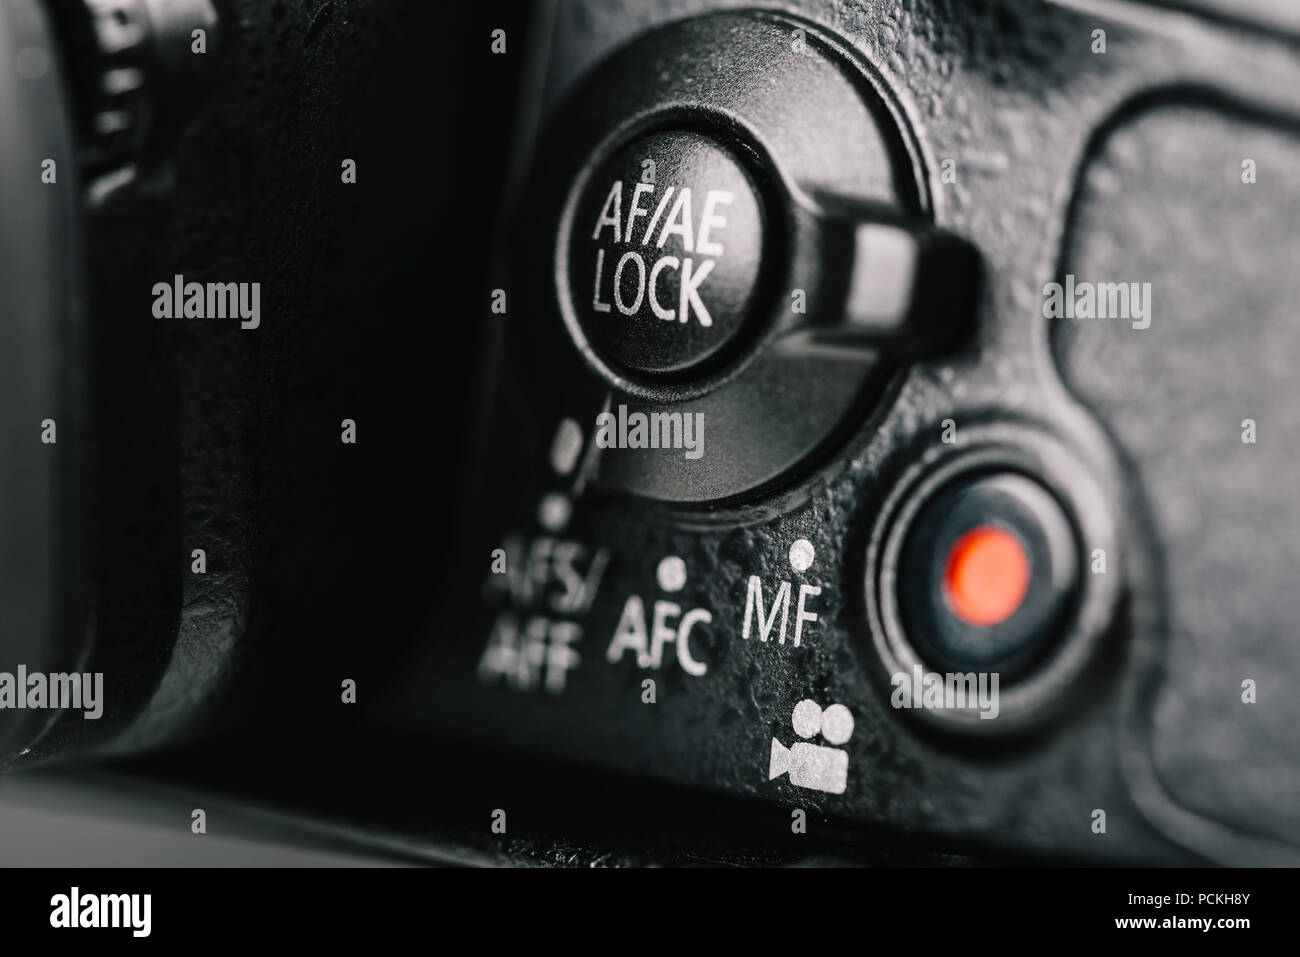 Auto-Focus, Auto-Exposure Lock Dial And Movie Record Button On Digital  Camera Stock Photo - Alamy